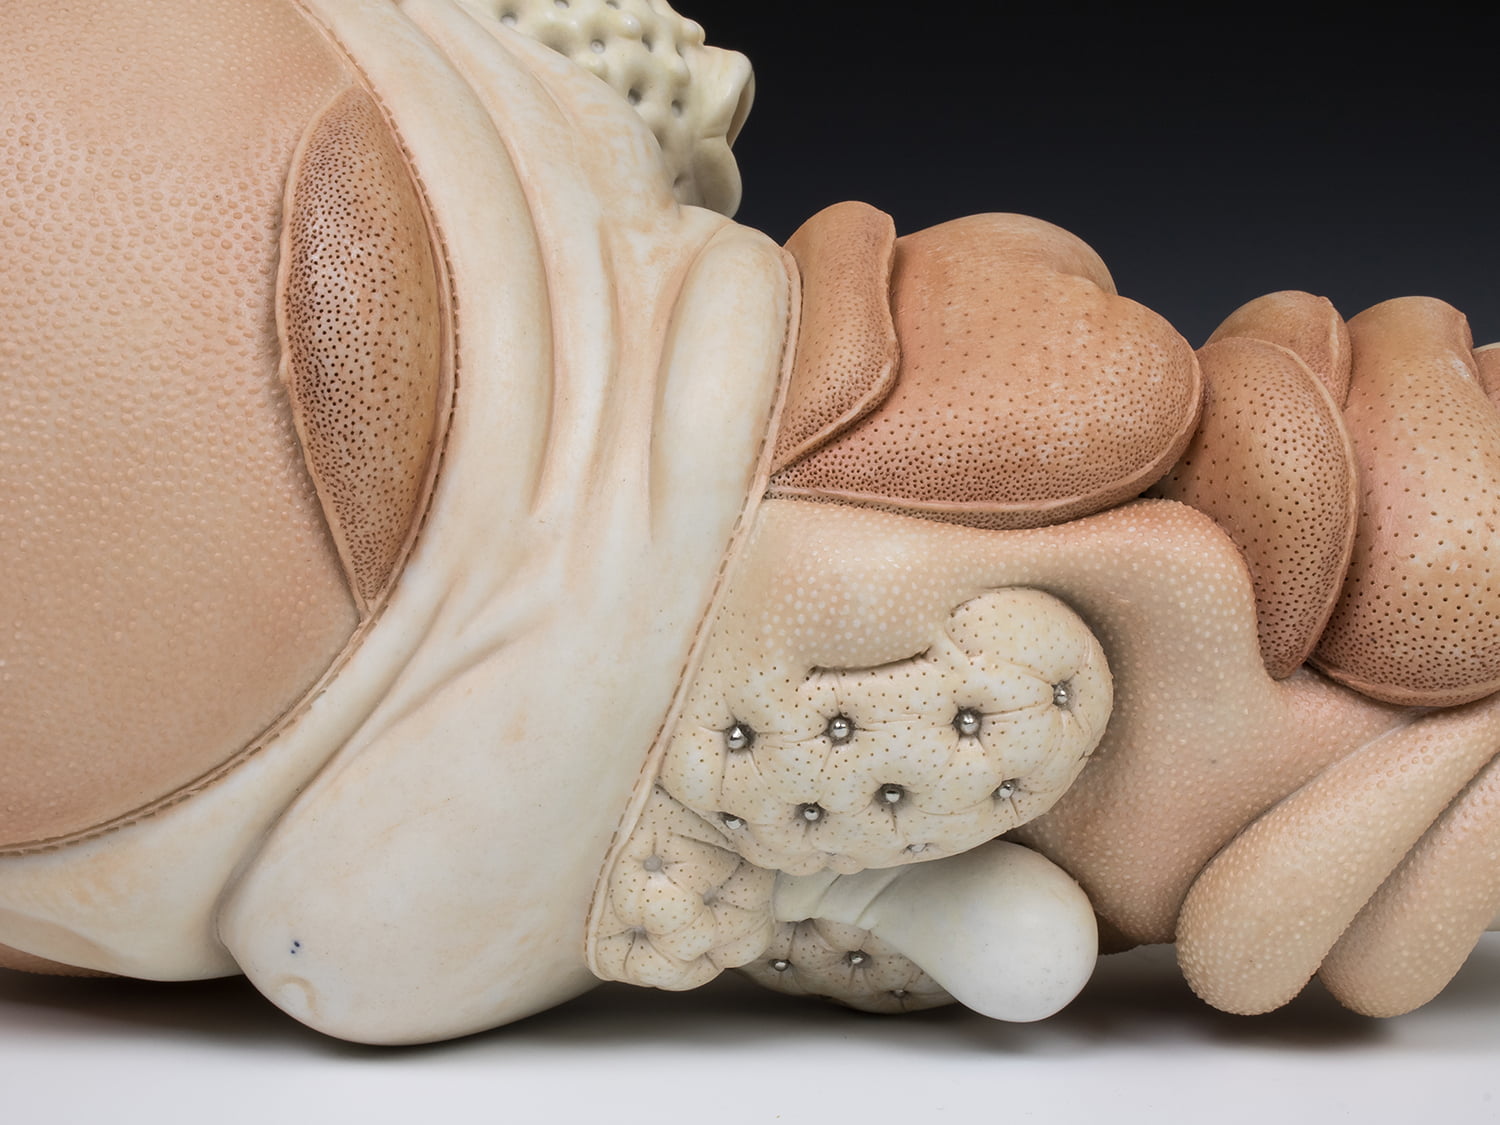 Jason Briggs "Strut" (detail 3). porcelain, hair, and mixed media sculpture ceramics.